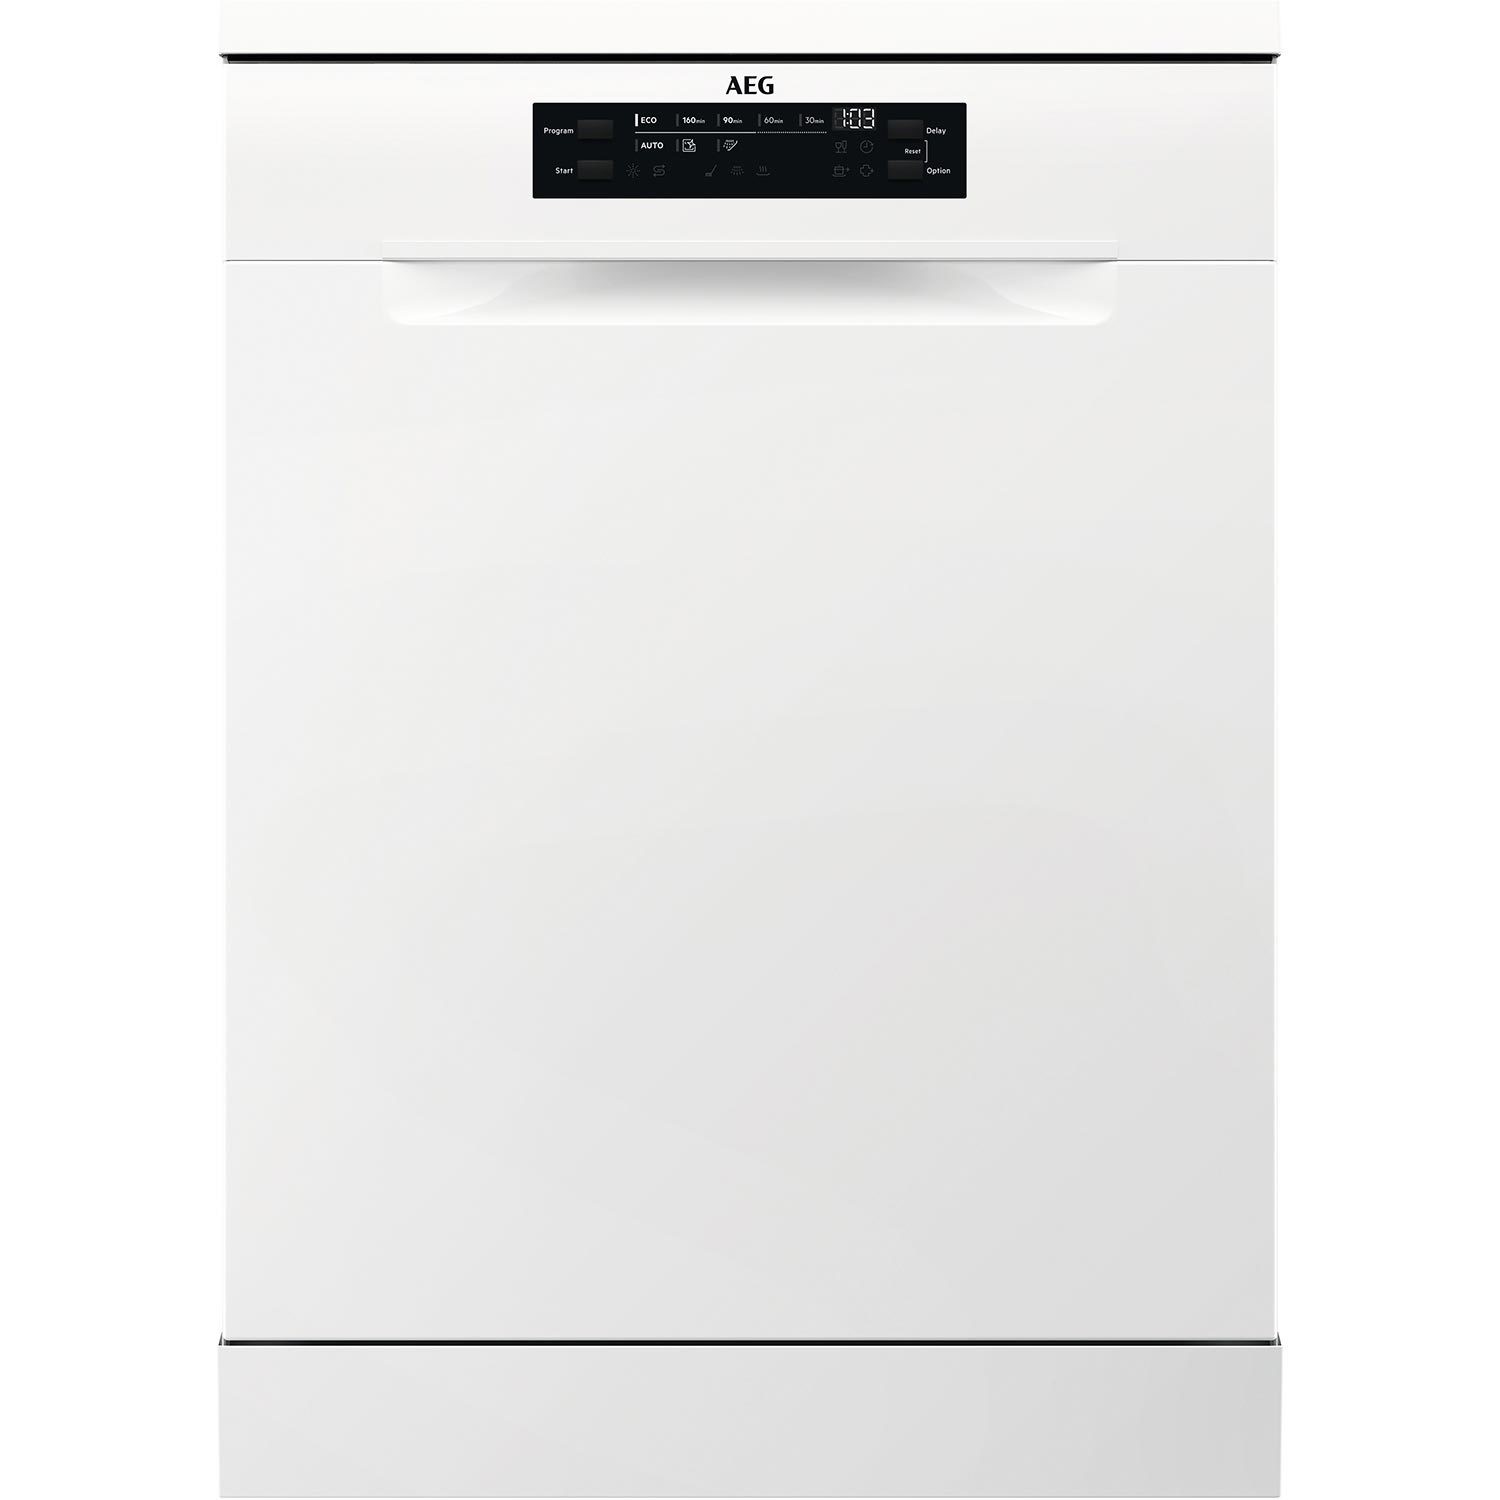 Photos - Dishwasher AEG 6000 Series 13 Place Settings Freestanding  - White FFB53617 